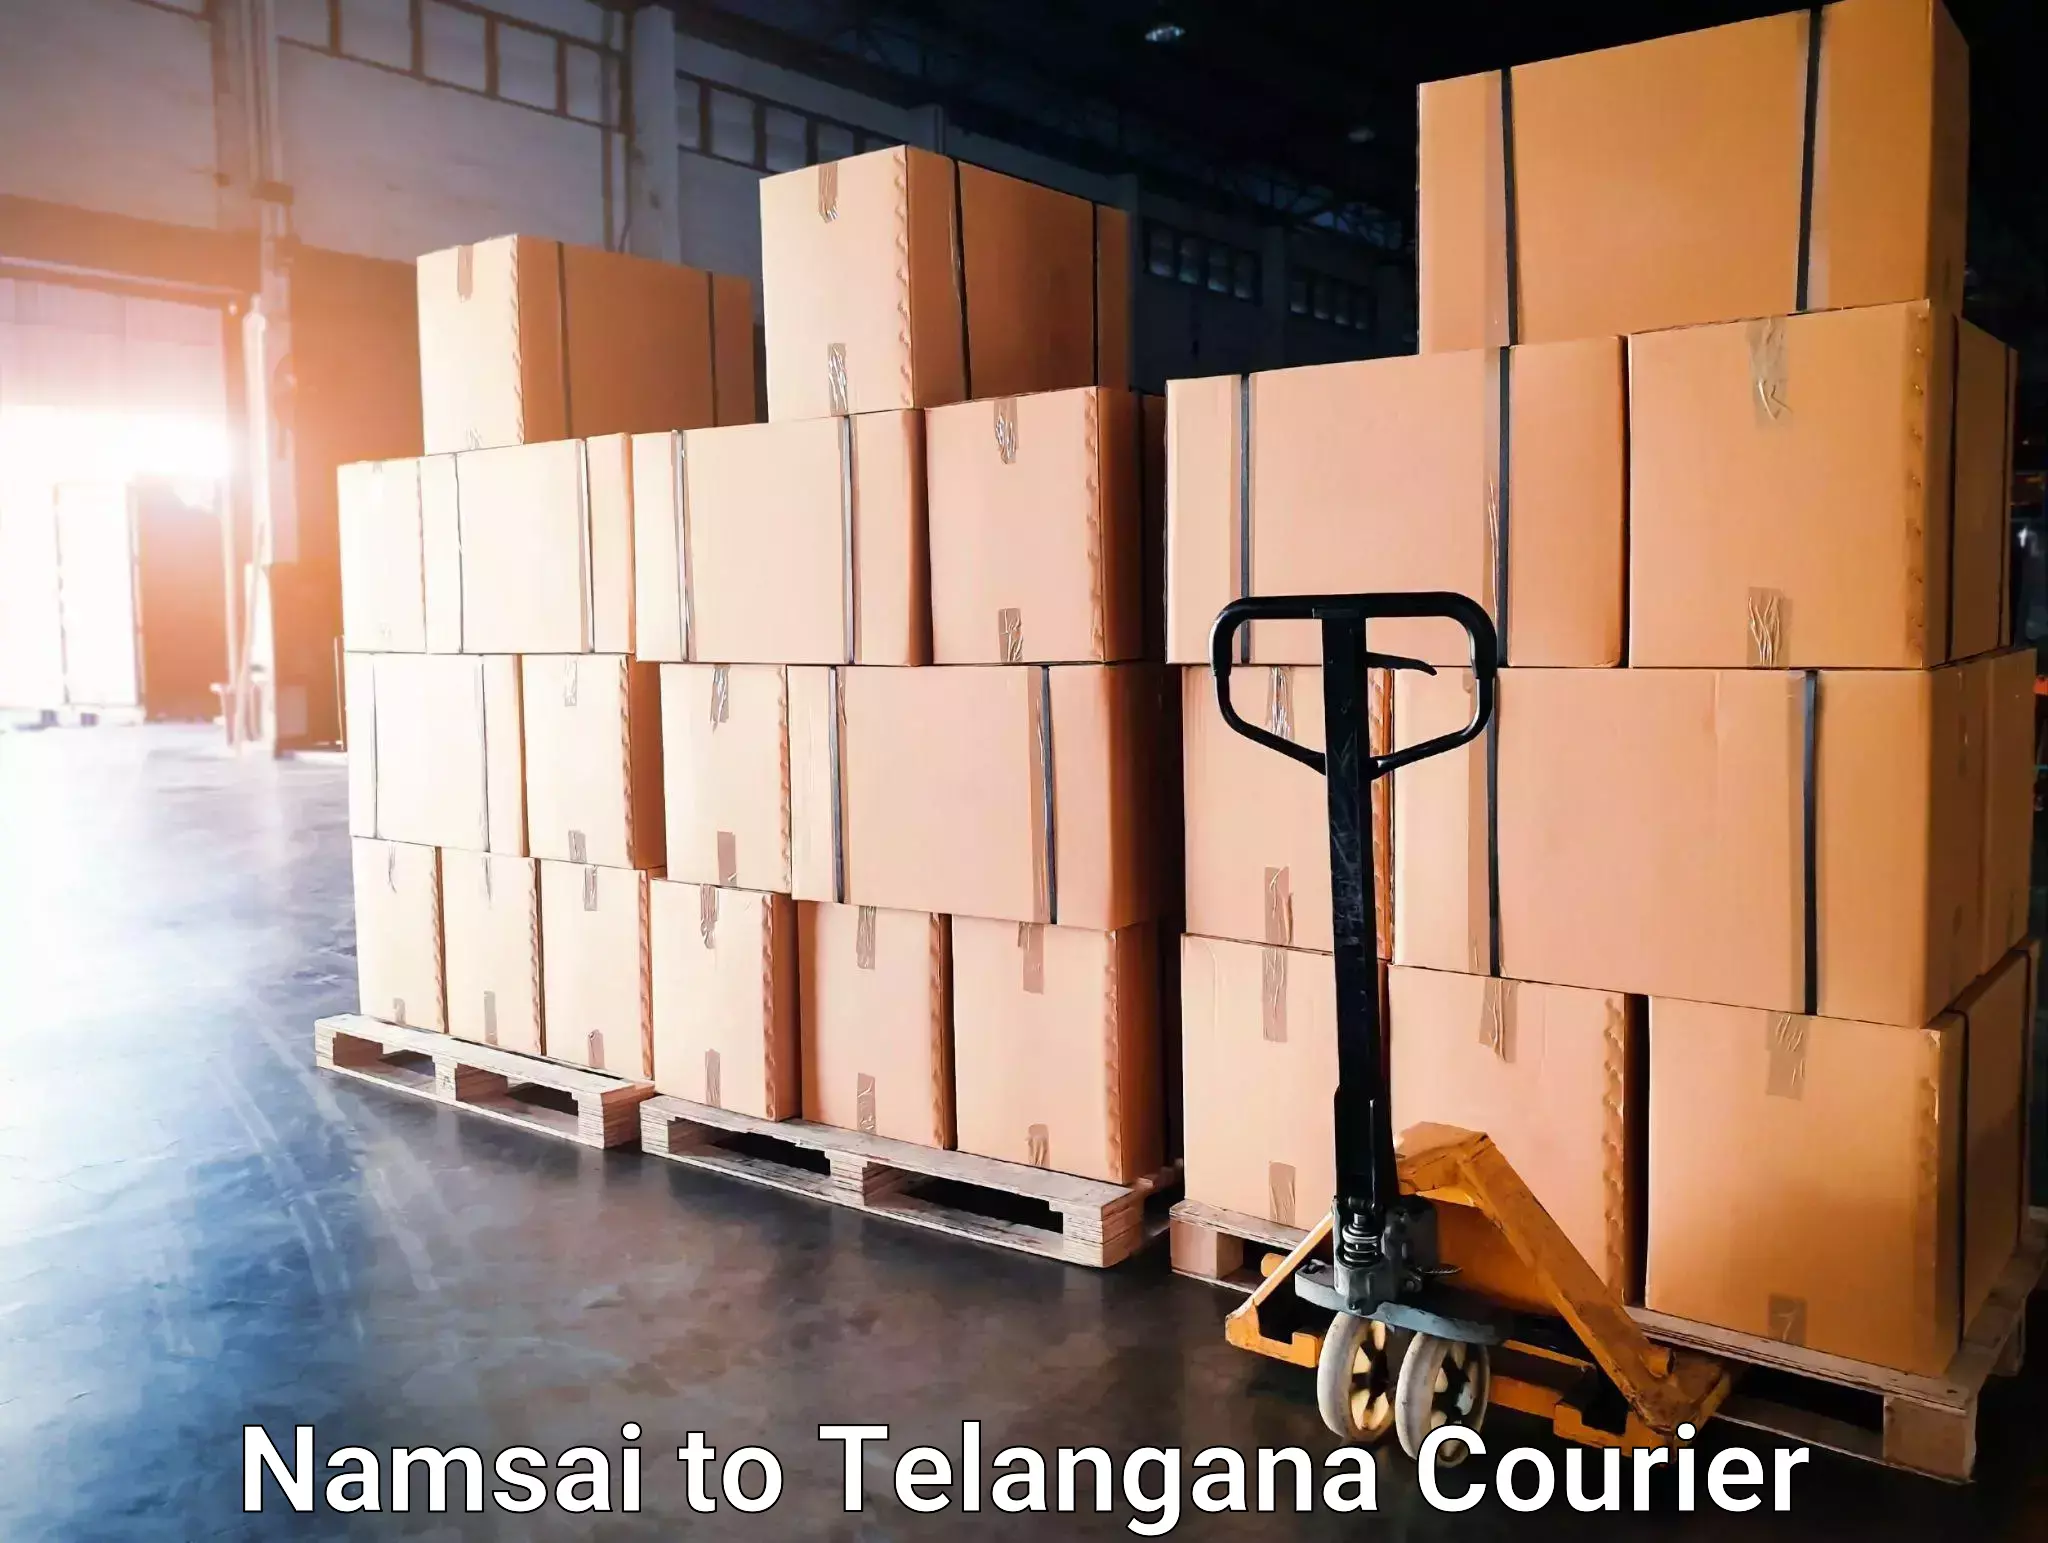 State-of-the-art courier technology in Namsai to Mudigonda